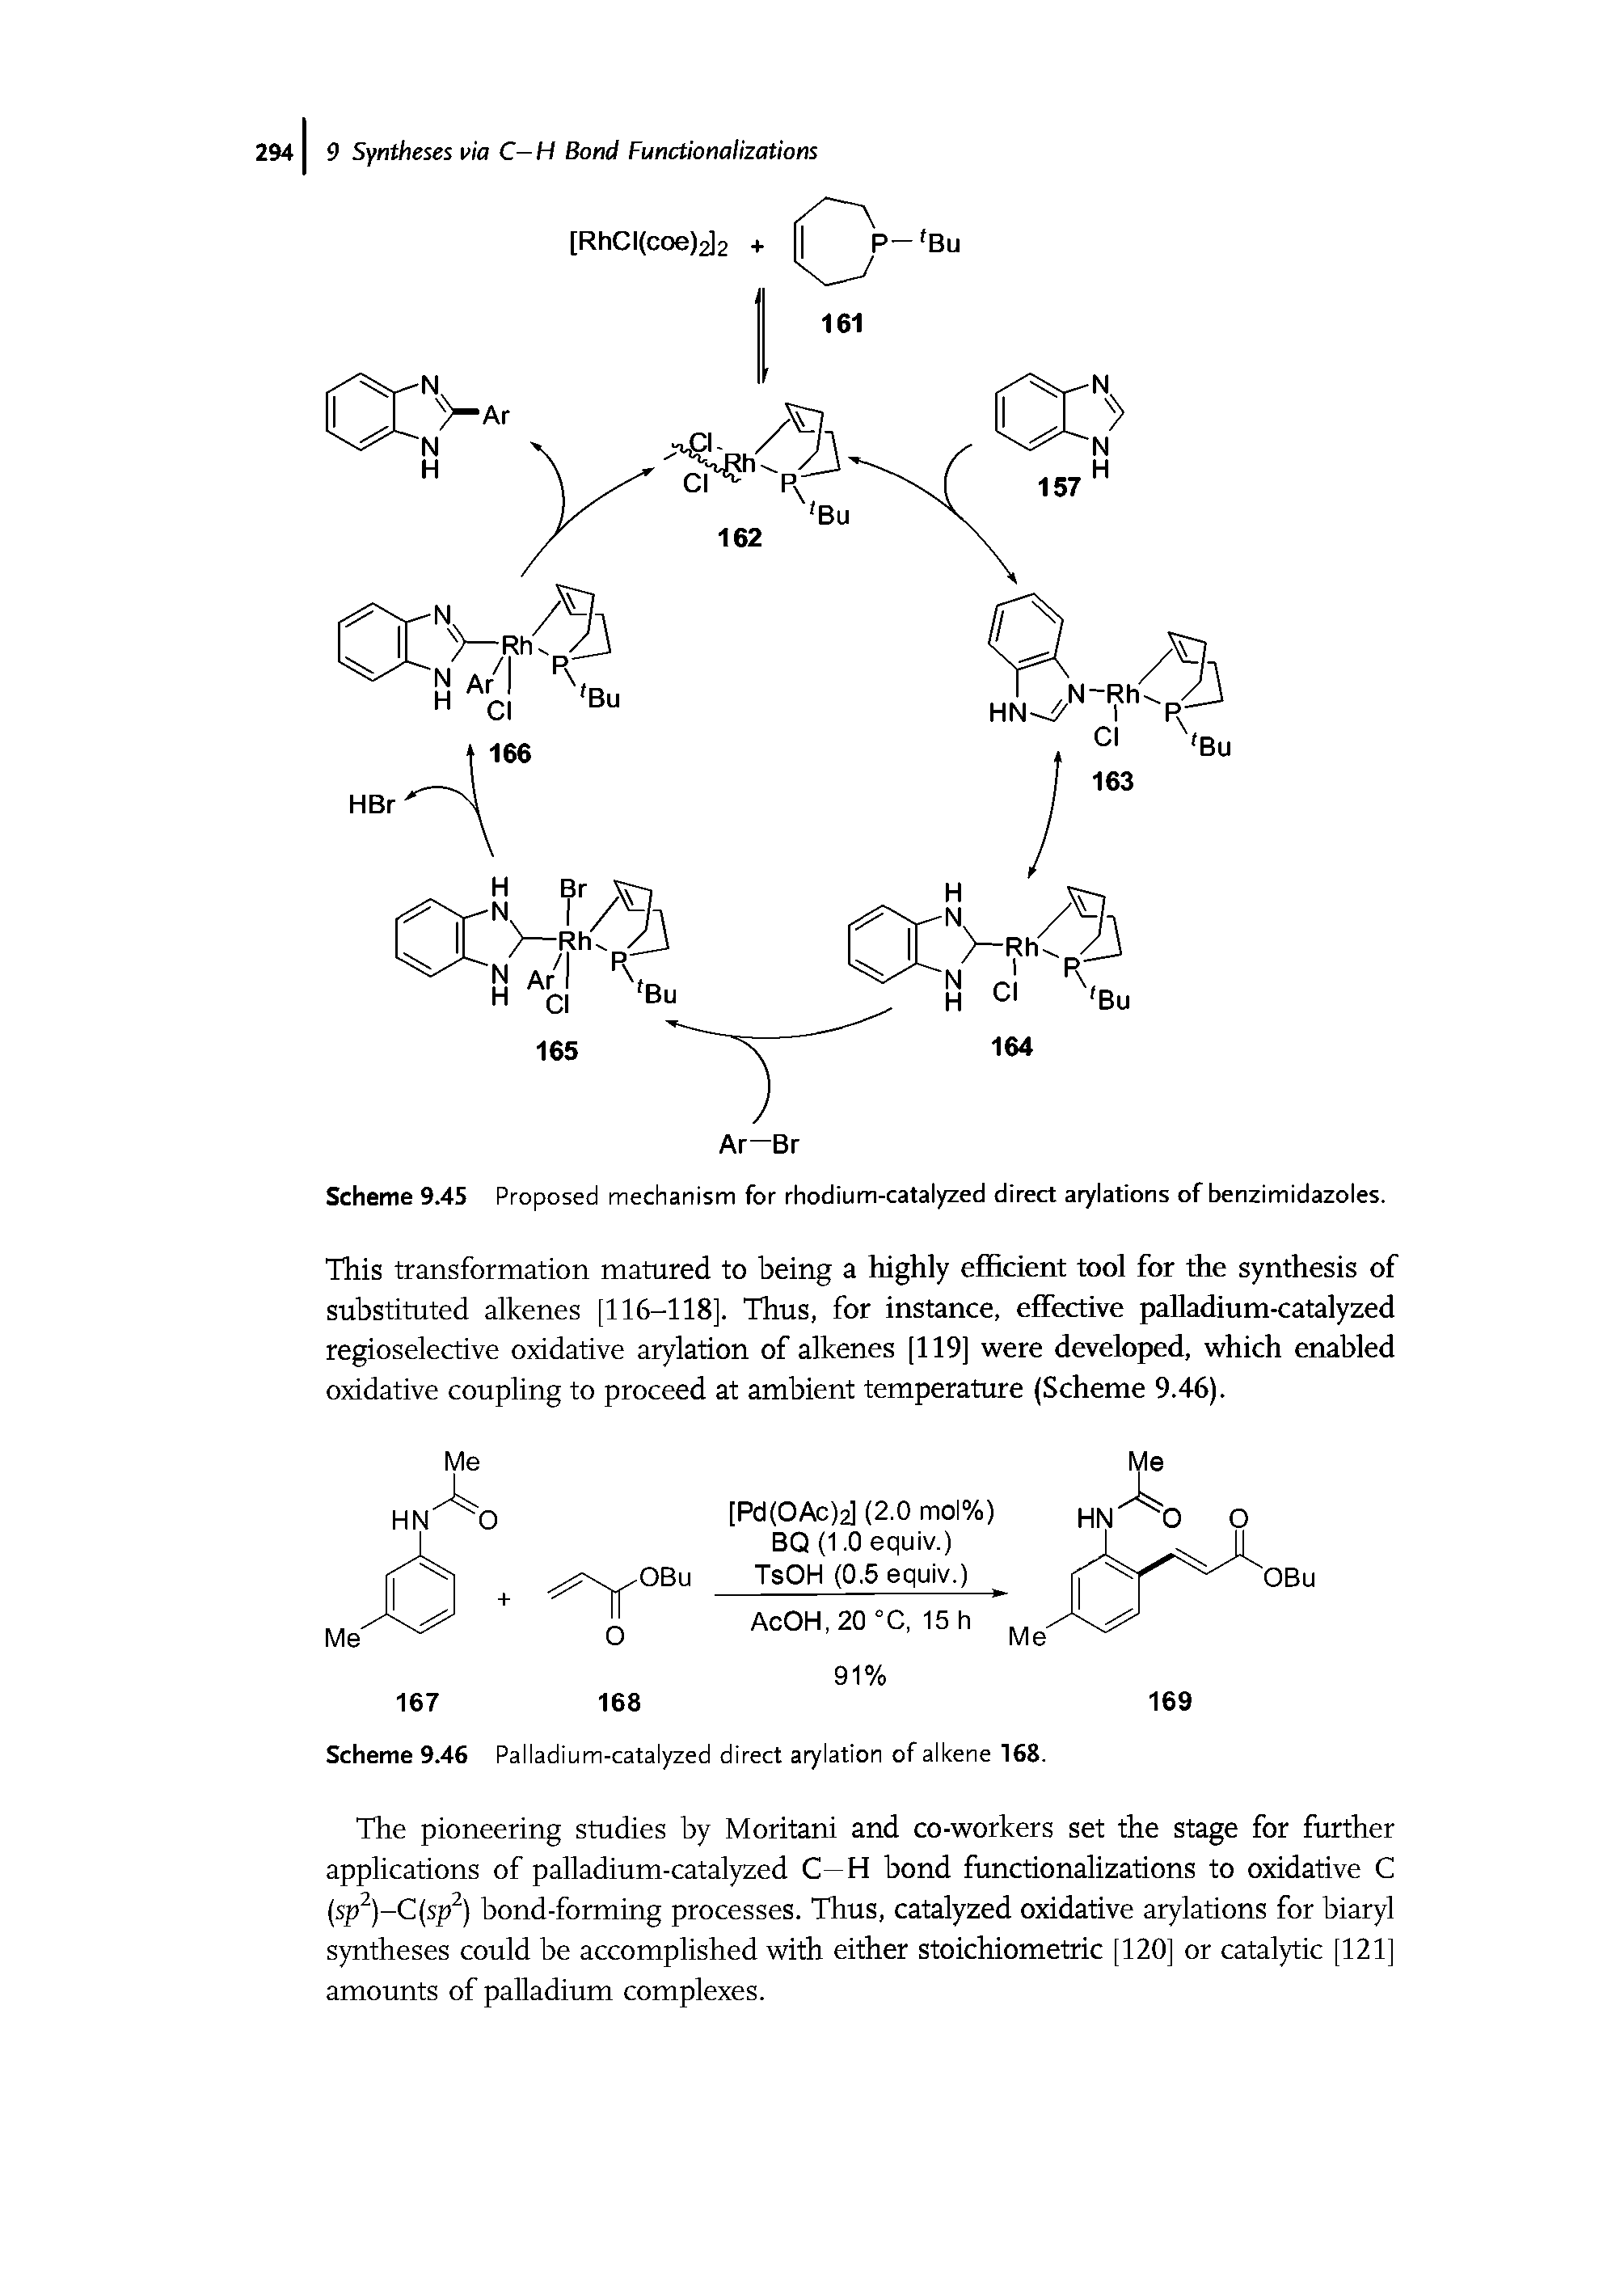 Scheme 9.45 Proposed mechanism for rhodium-catalyzed direct arylations of benzimidazoles.